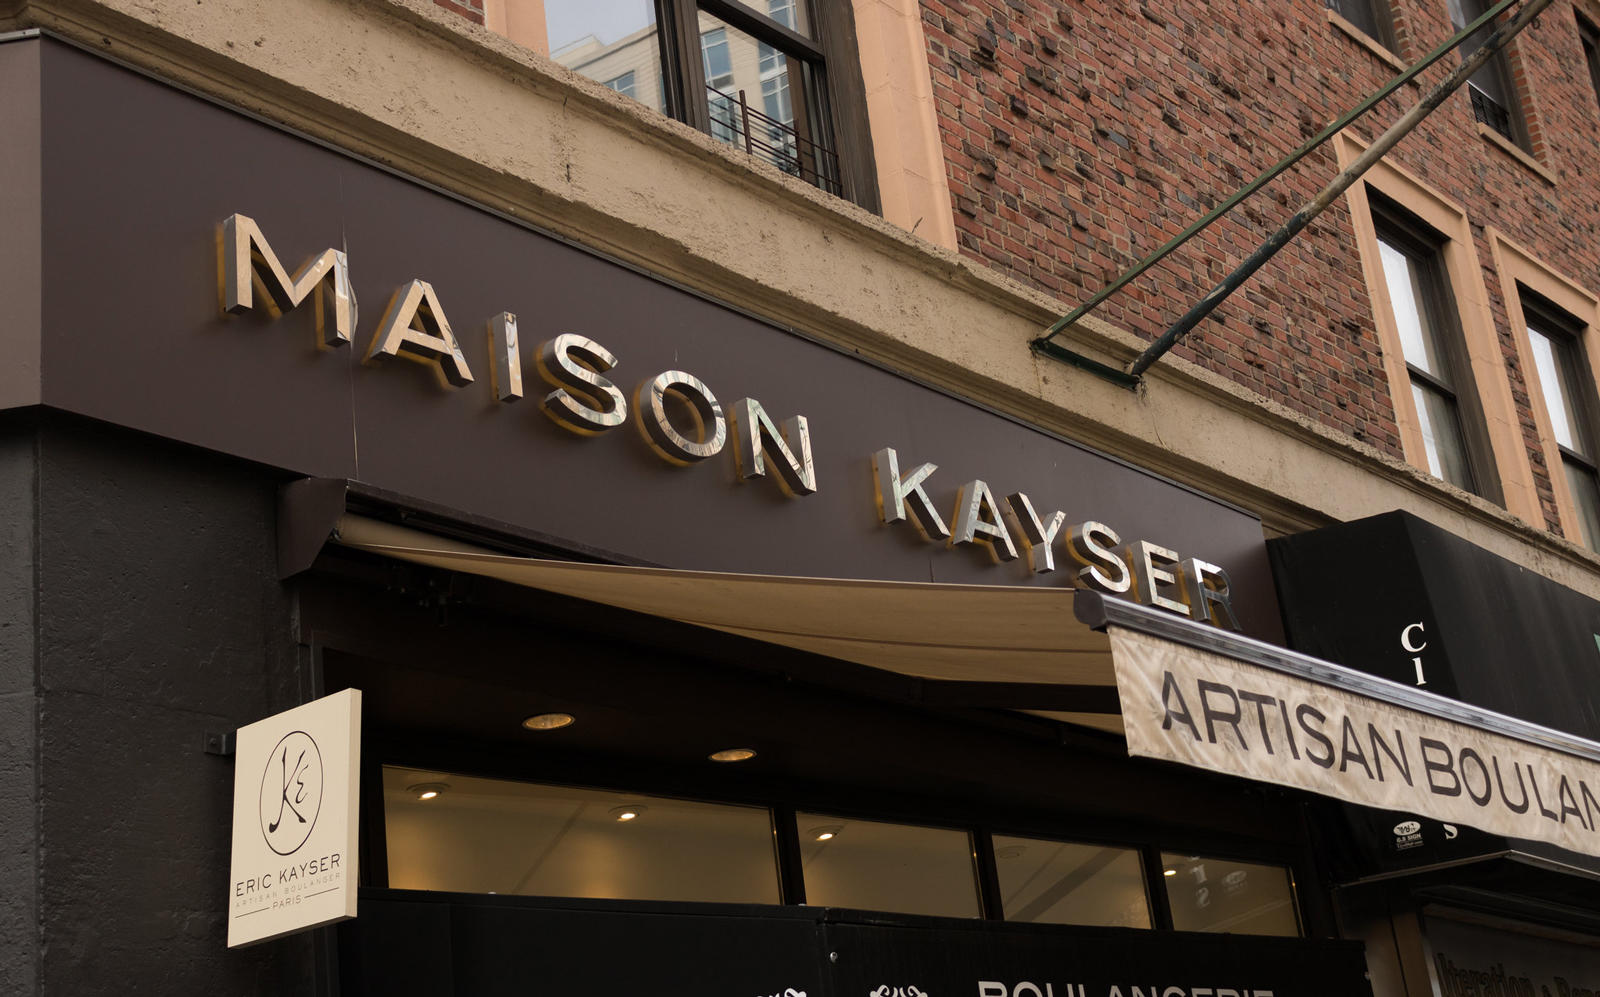 Maison Kayser (Photo via Tools of Men via Flickr)